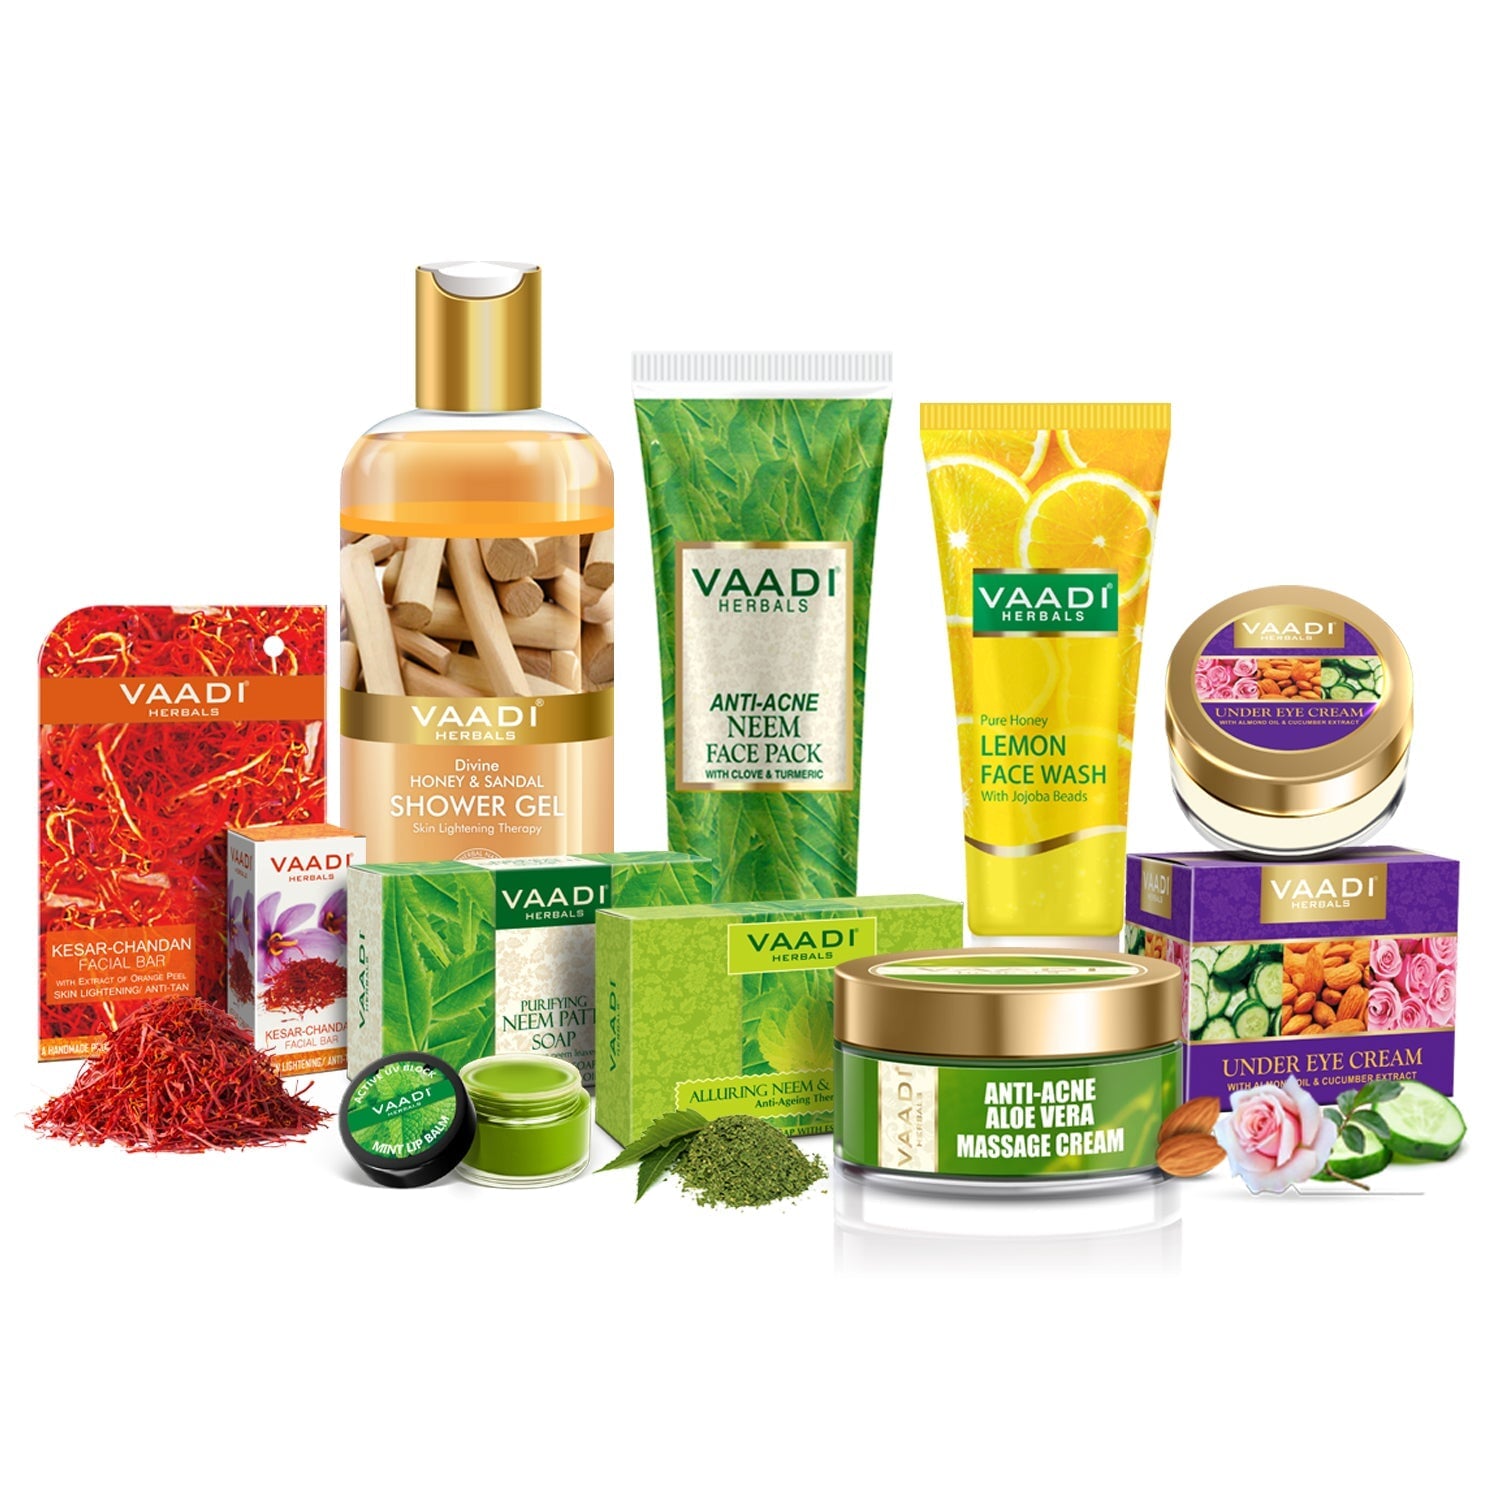 Organic Anti-Acne Skin Care Set - Get Clear, Smooth & Acne Free Skin